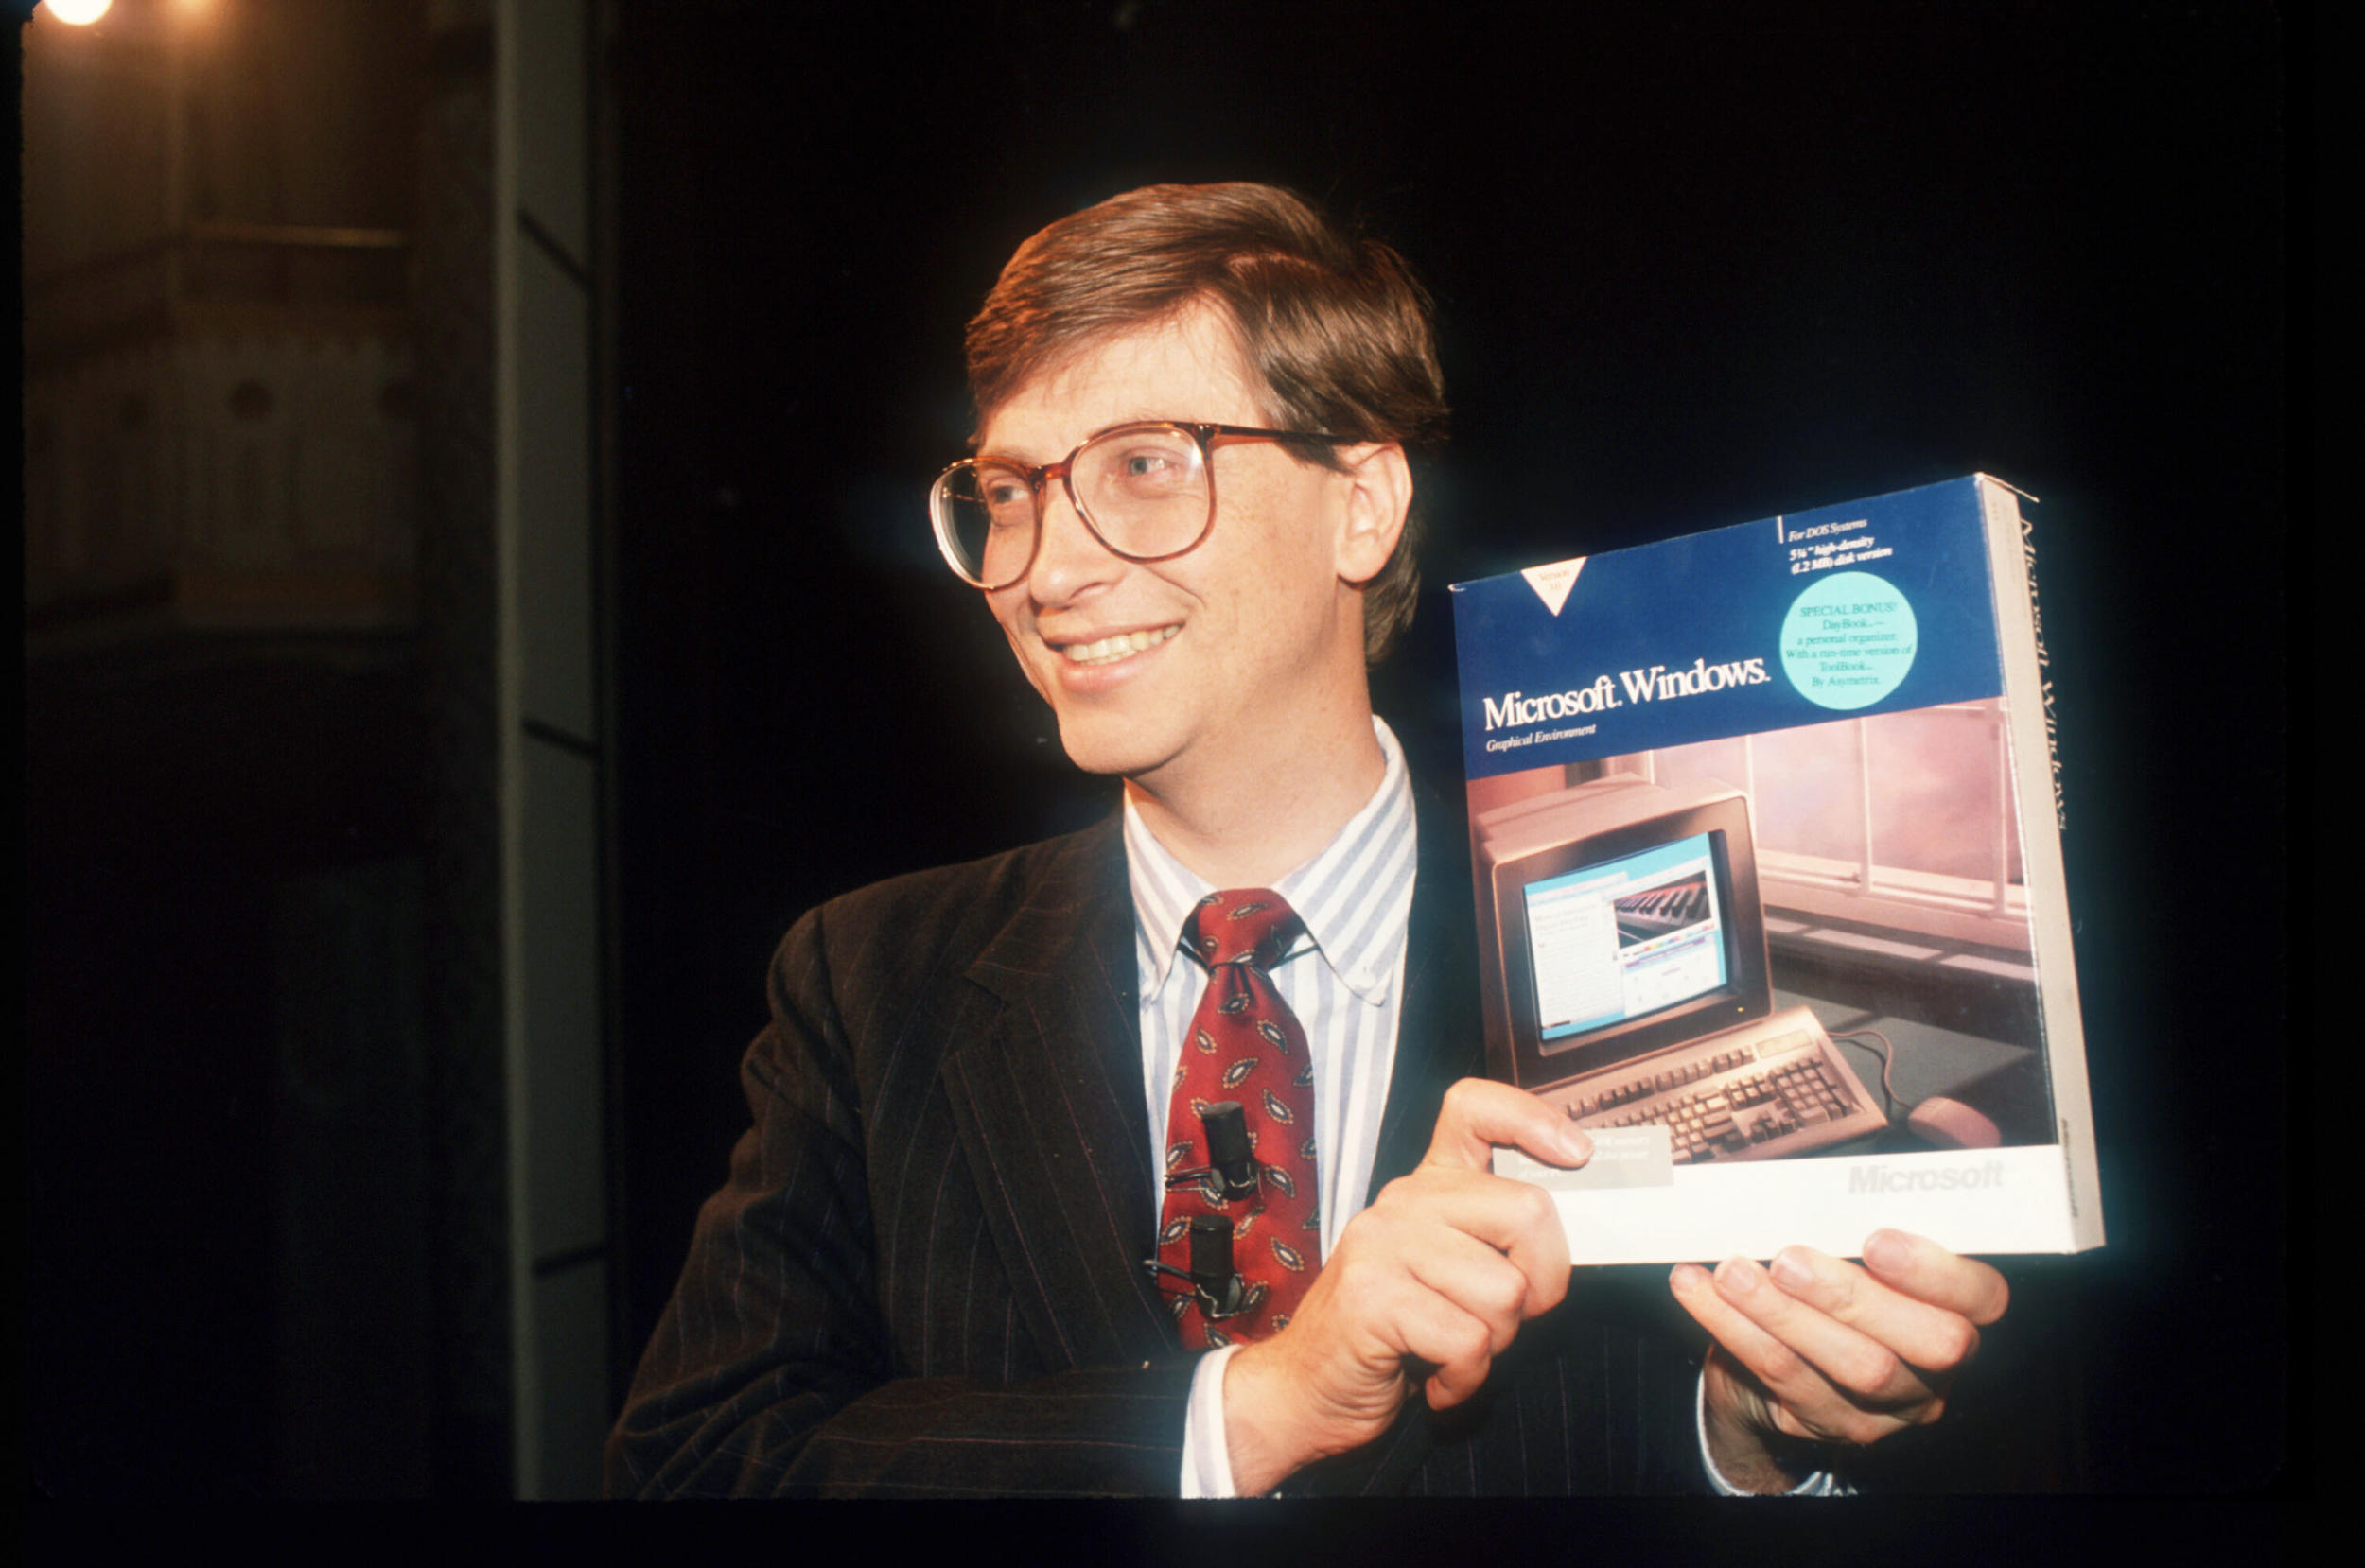 Windows story. Билл Гейтс Майкрософт. Билл Гейтс в 1979. Билл Гейтс в молодости. Билл Гейтс молодой.